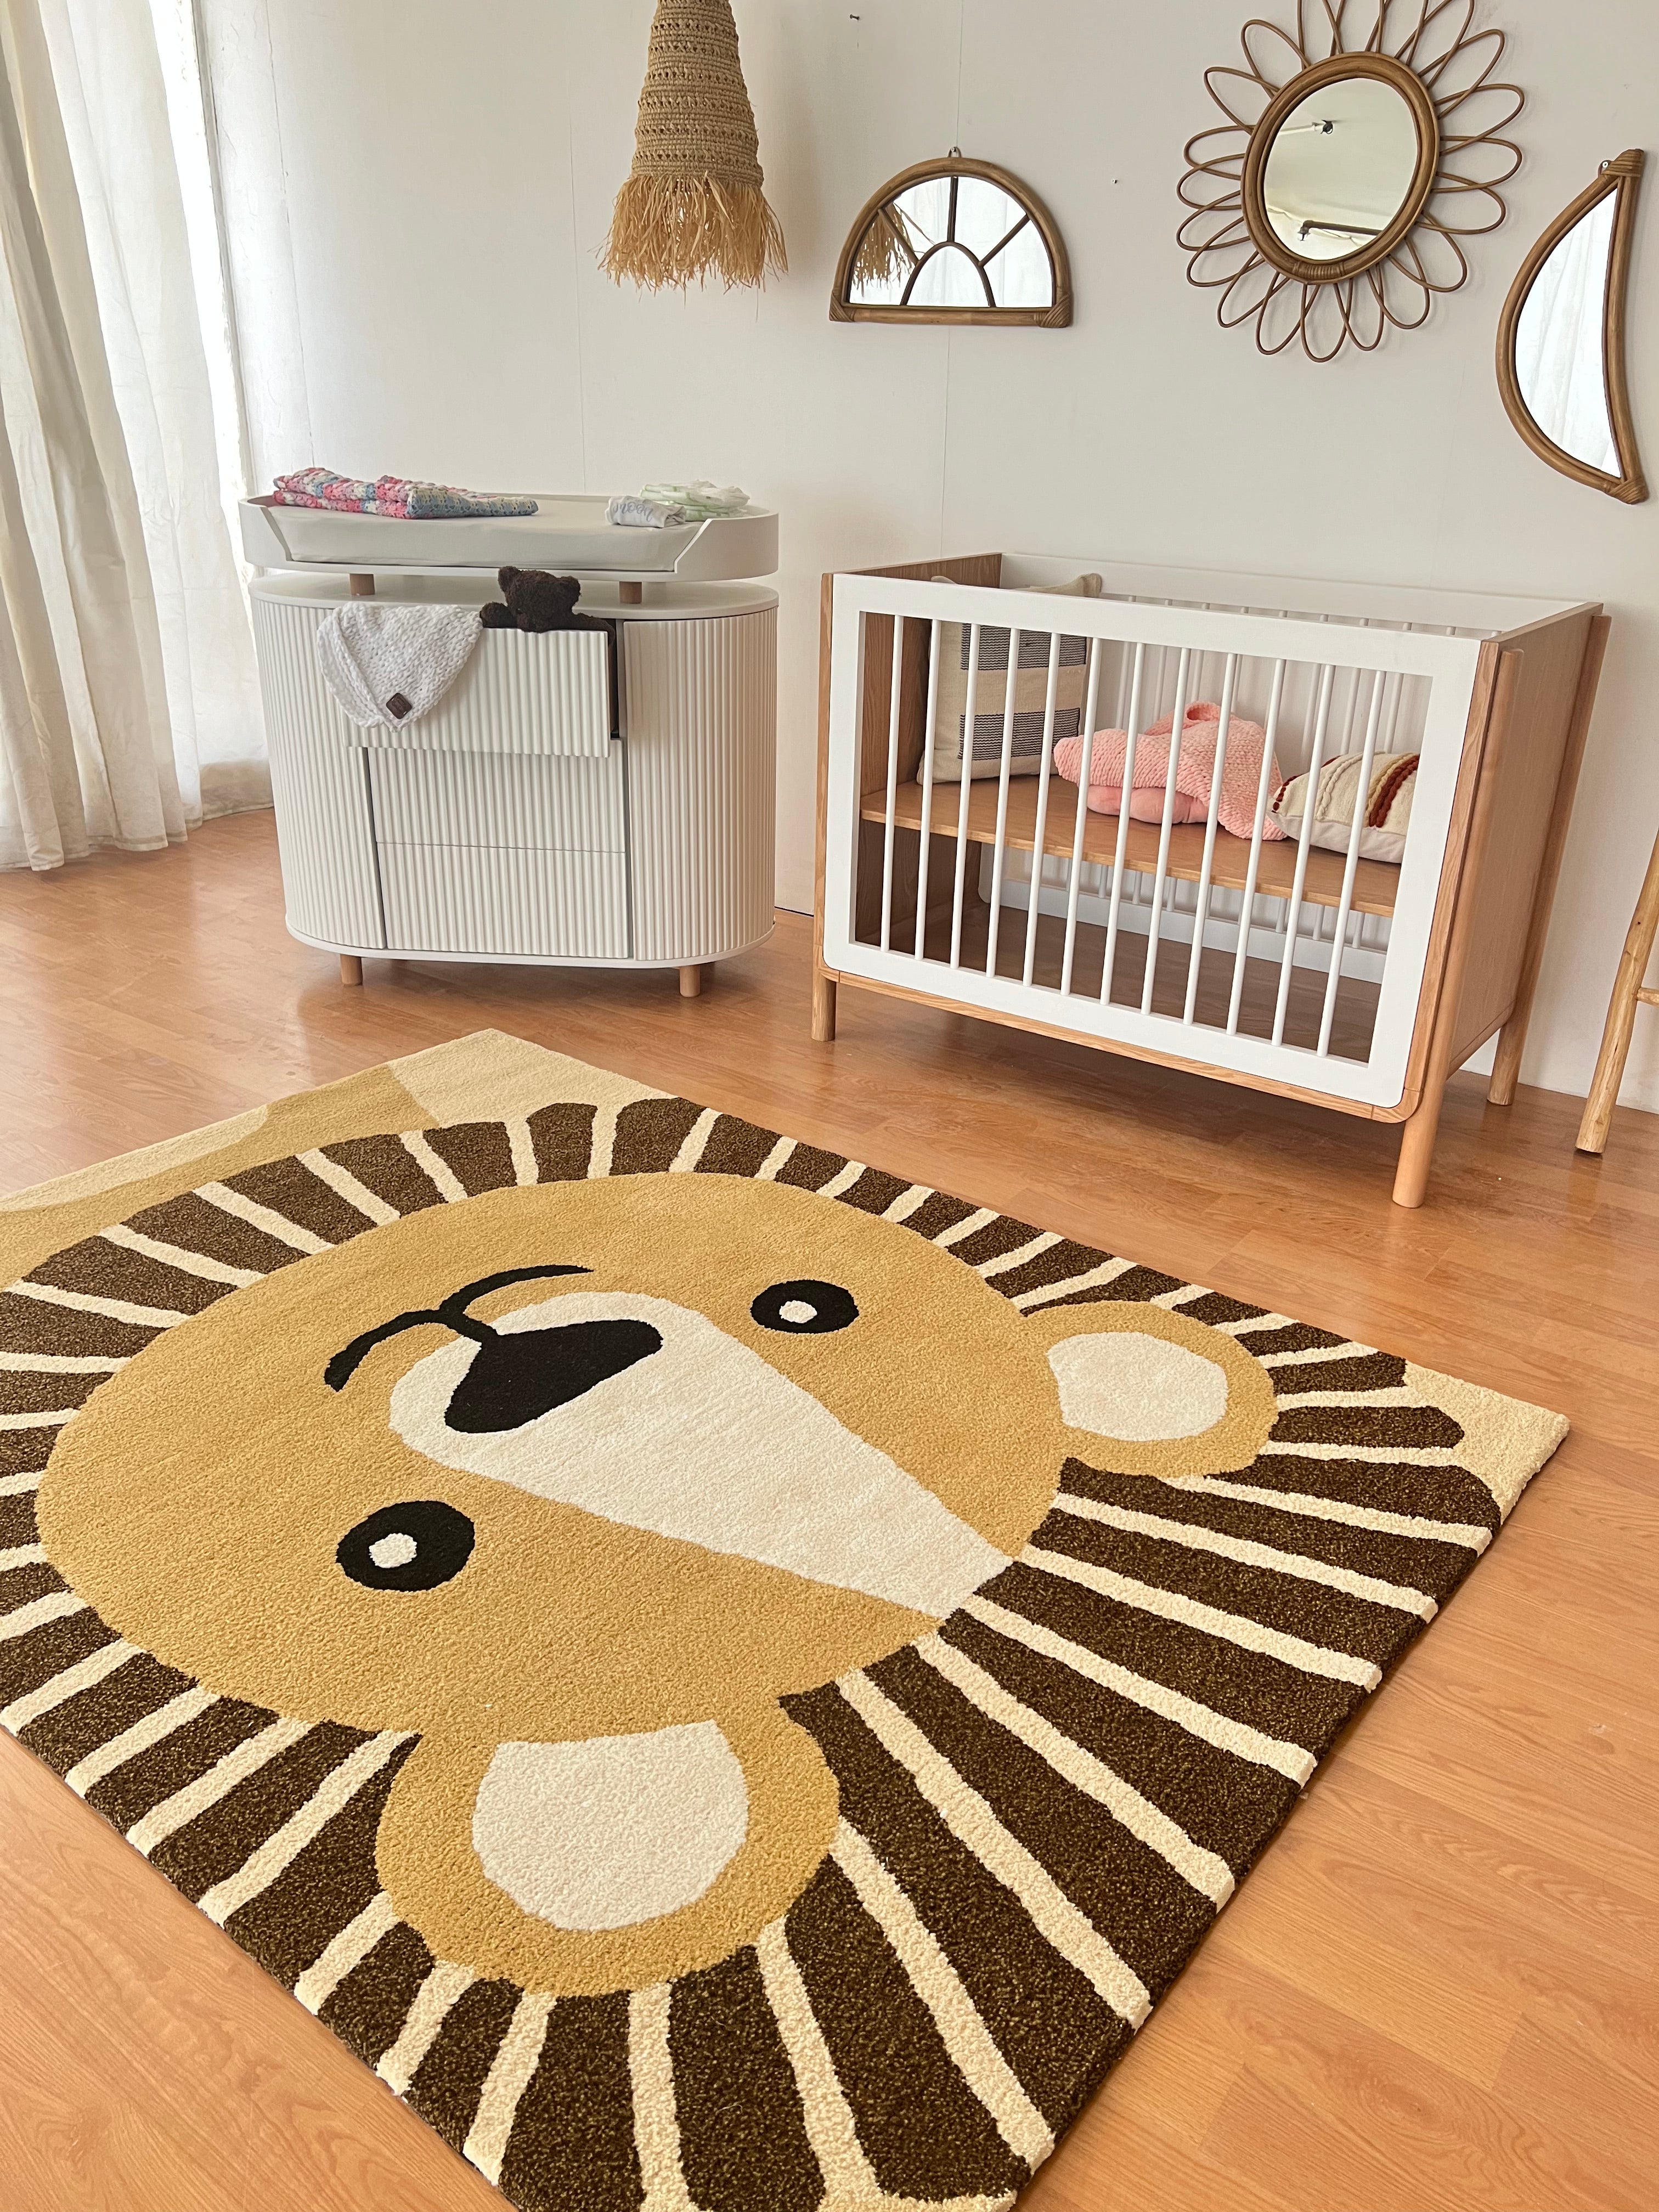 Lion Says Roar kids carpet